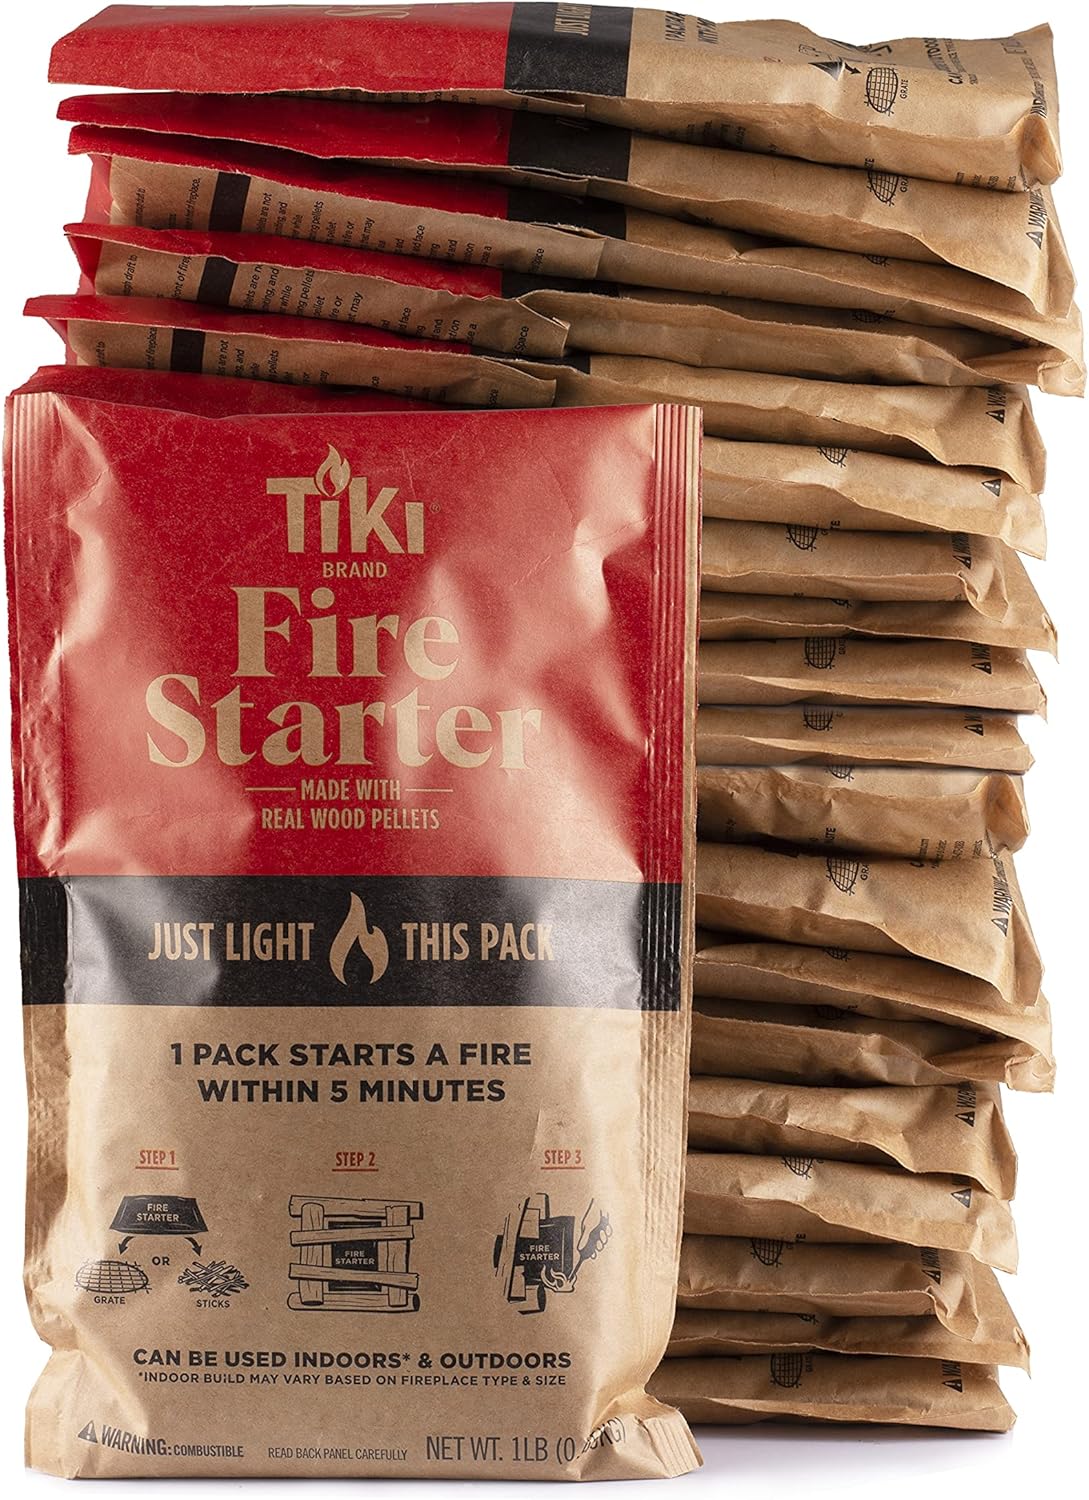 TIKI Brand Fire Starter, Indoor/Outdoor Fire Starter, Wood Pellets, Outdoor Fire Pit Fire Starter, Indoor Fire Place Fire Starter, Easy Fire Starter, 11.75